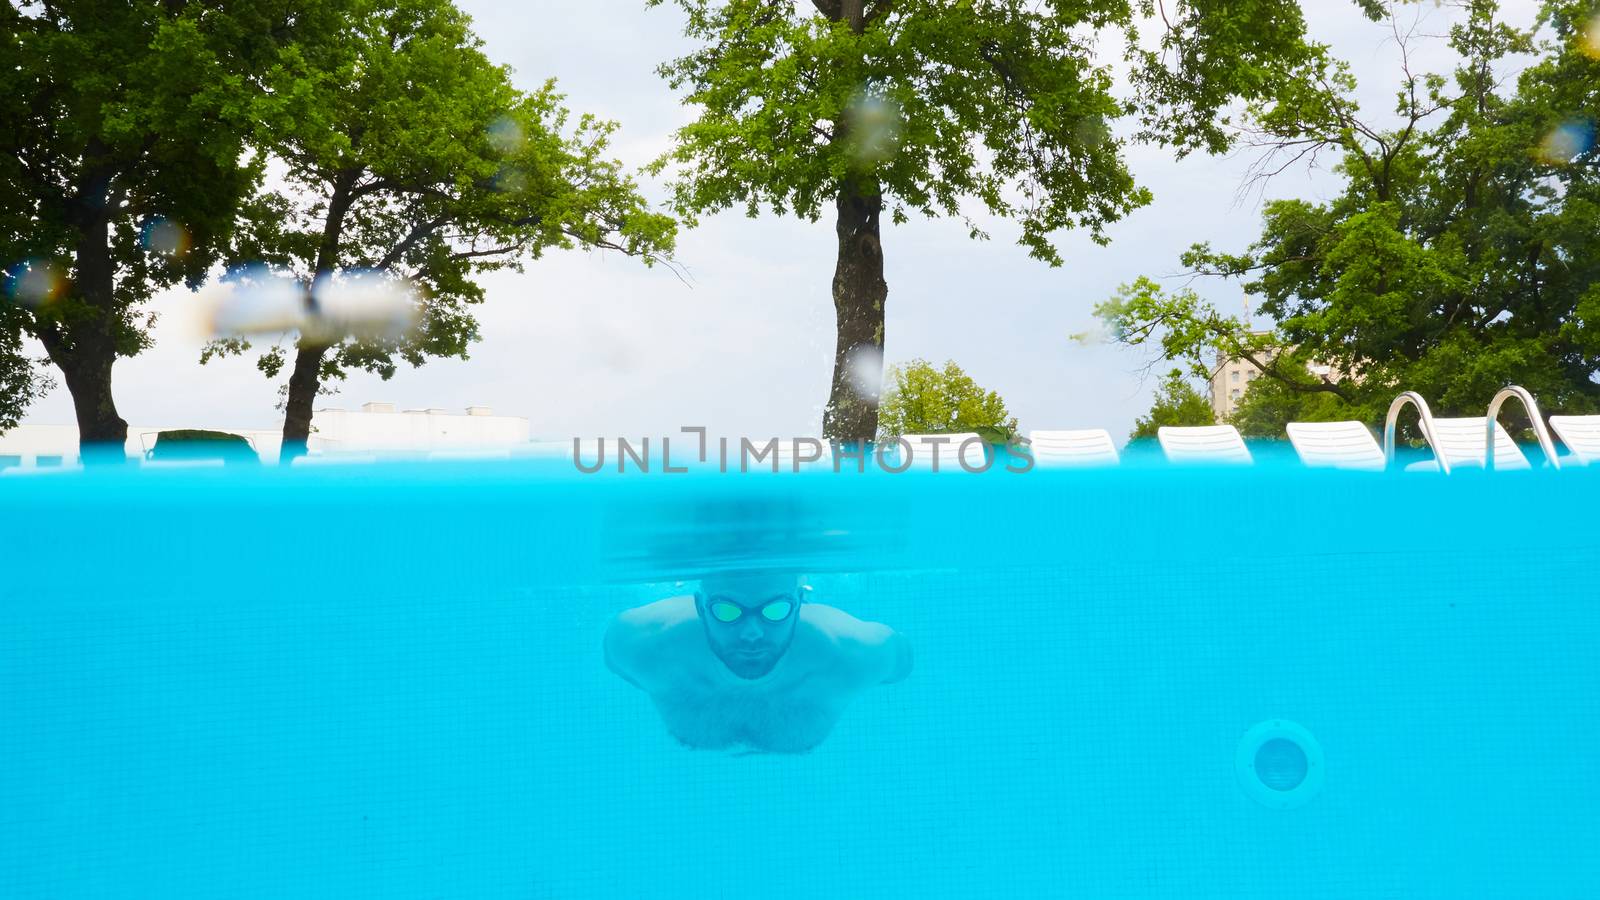 Swimmer Under Water in Pool by sarymsakov